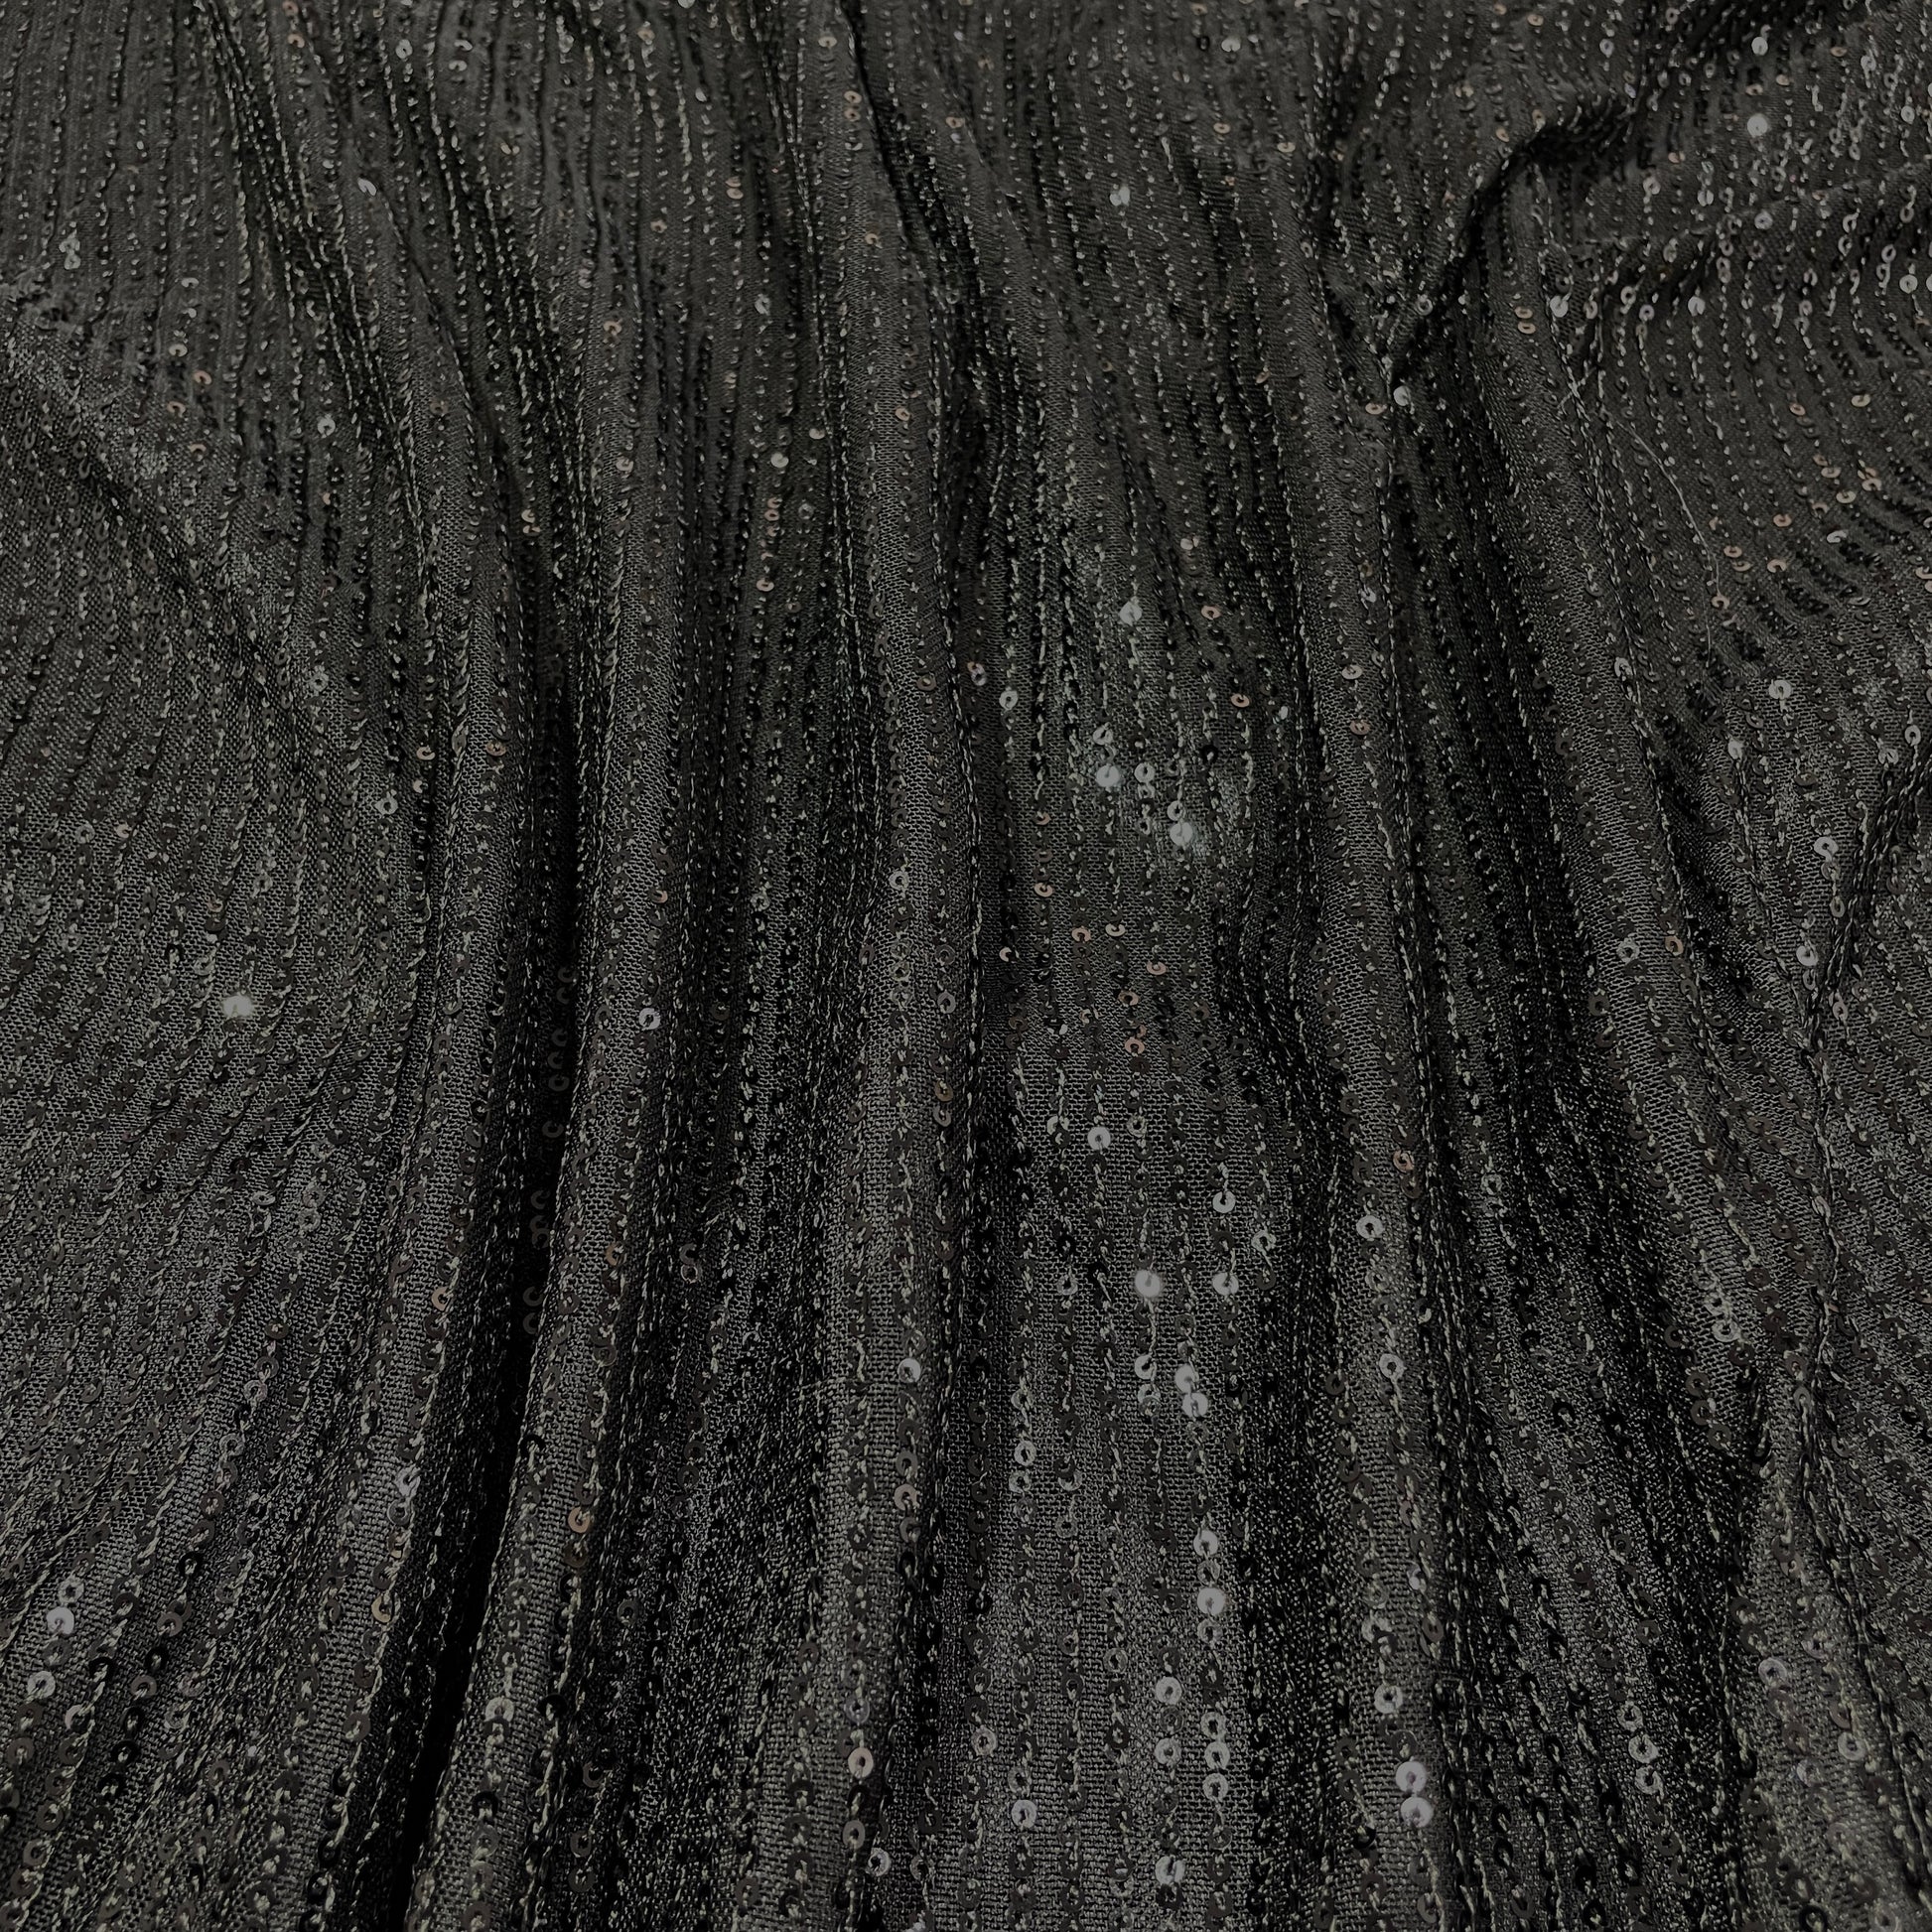 Black Sequence Embroidery Net FabricLycra Fabric - TradeUNO